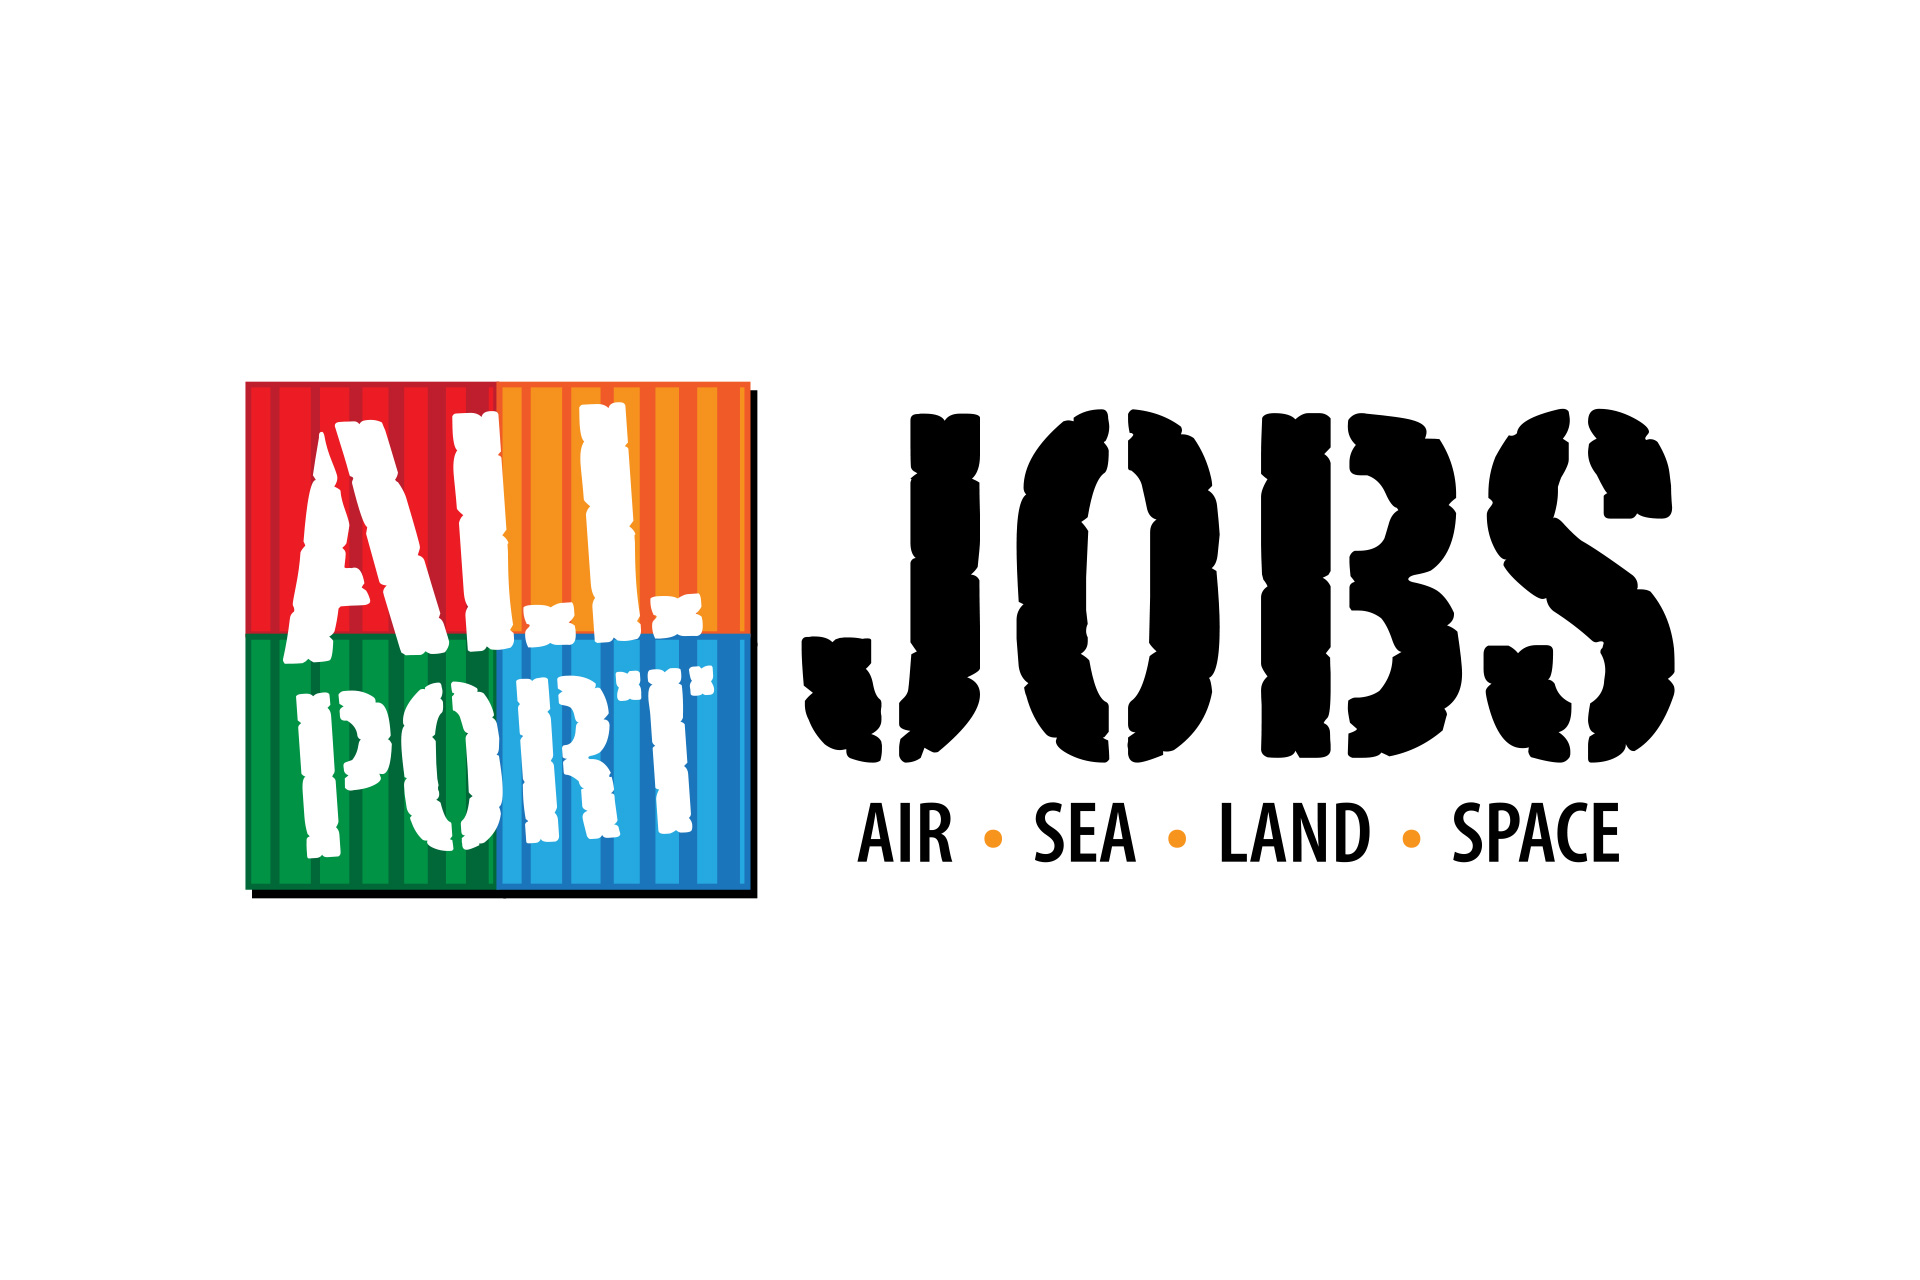 All Port Jobs